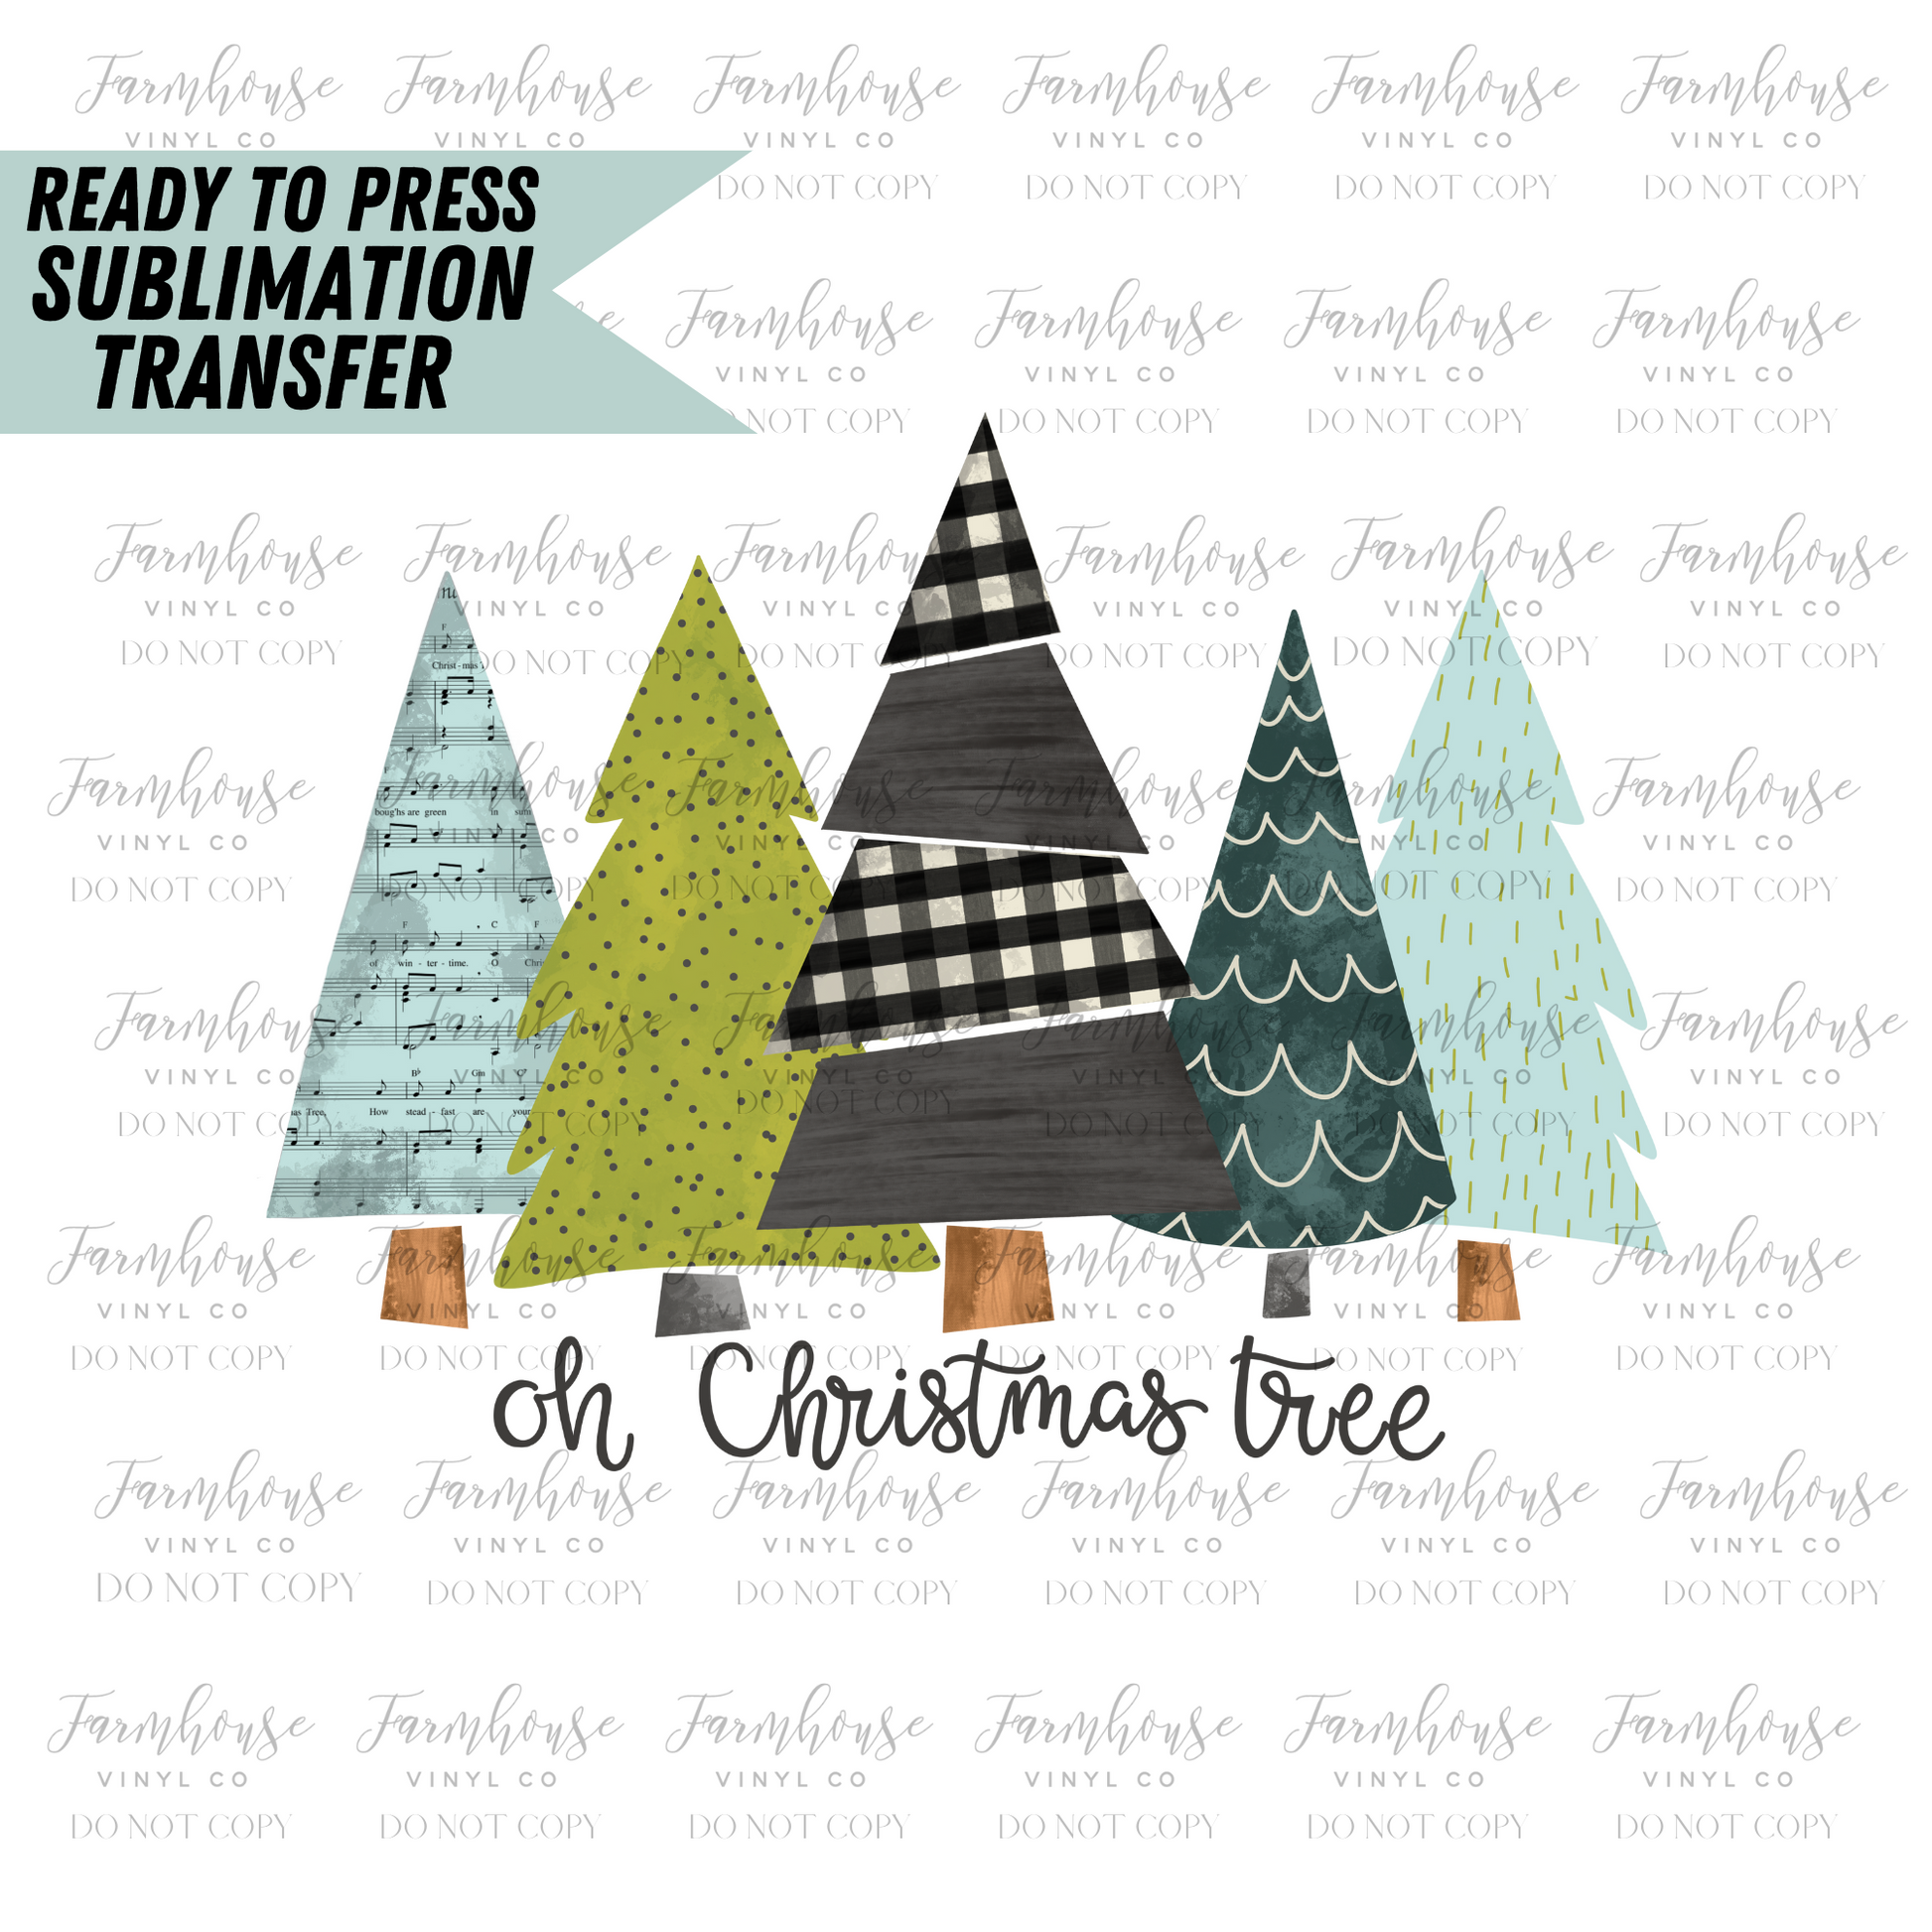 Oh Christmas Tree Ready To Press Sublimation Transfer - Farmhouse Vinyl Co